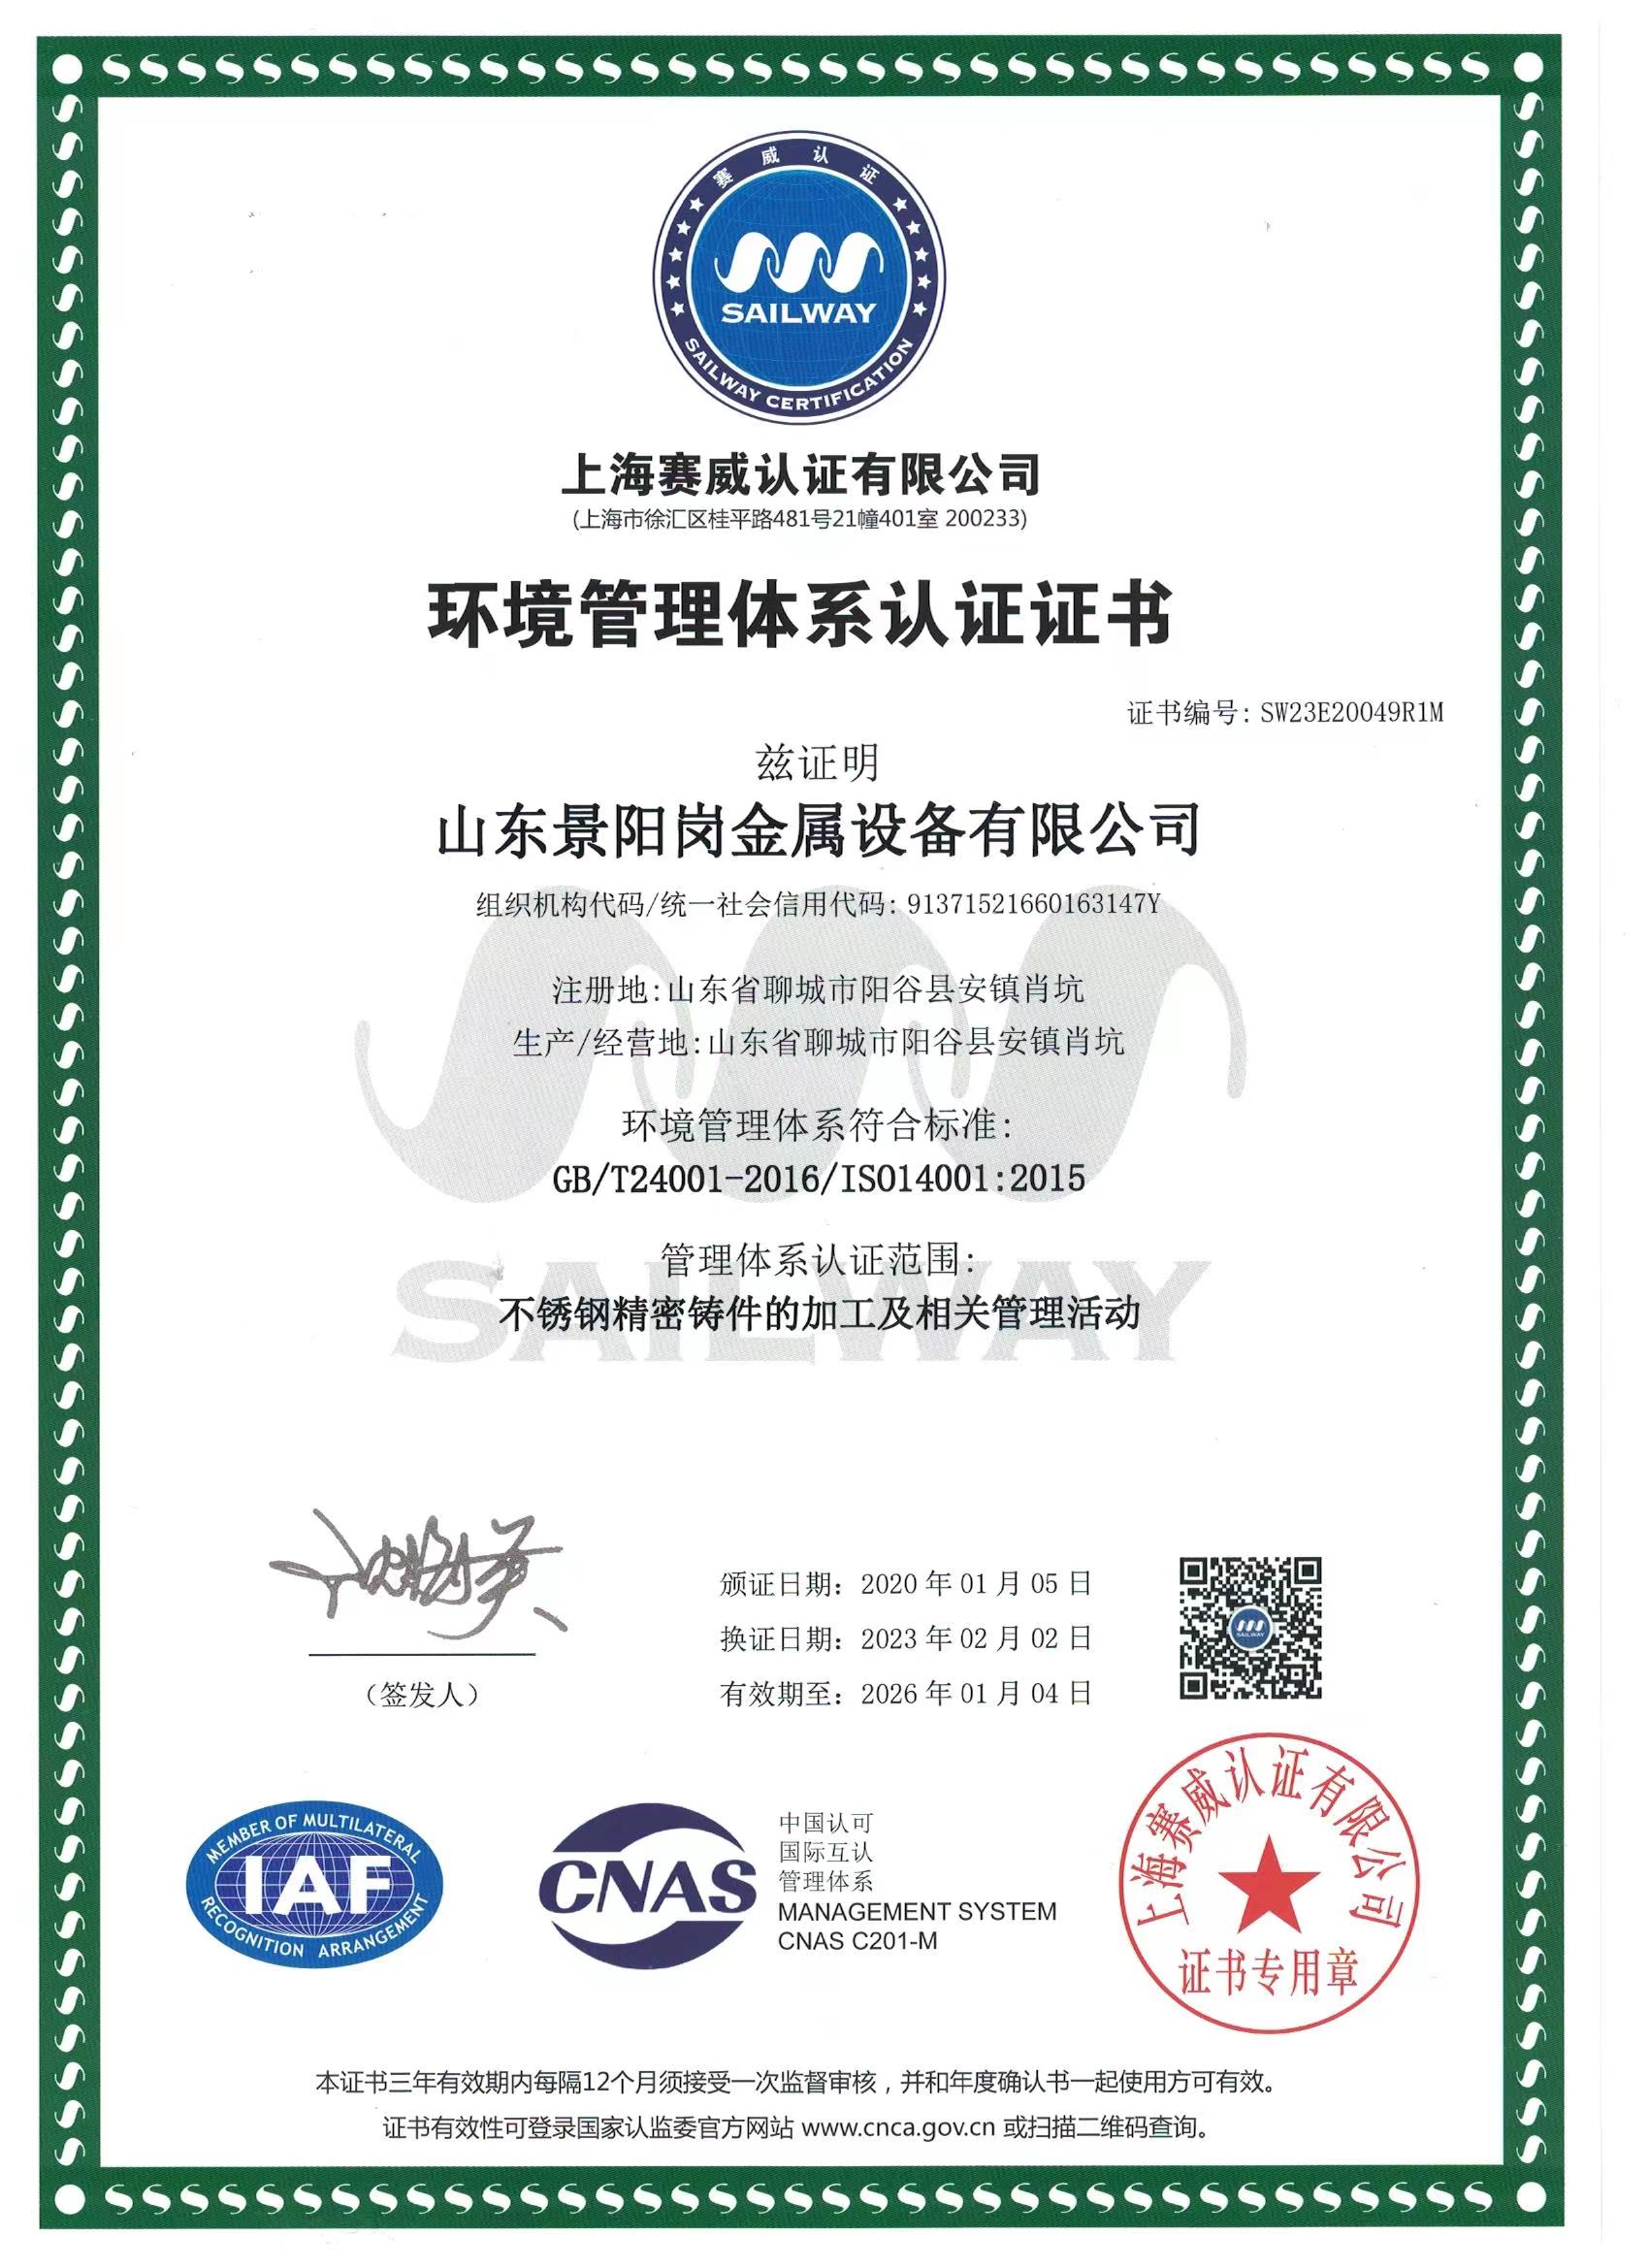 ISO14001 2015环境管理证书中文.jpg